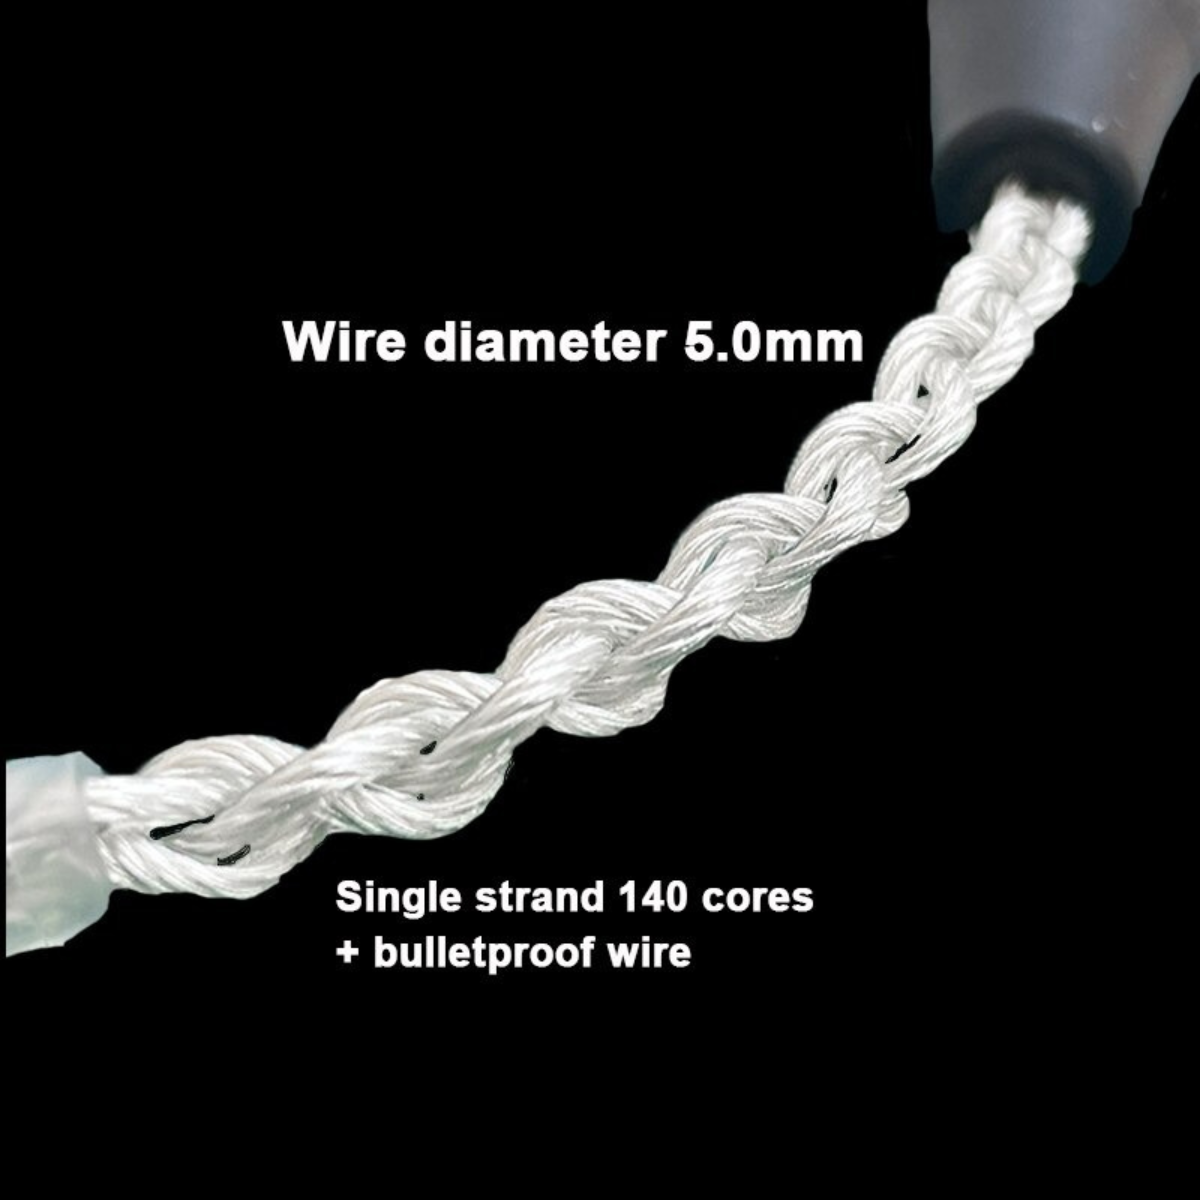 Tiandirenhe XLR Male Adapter Cable